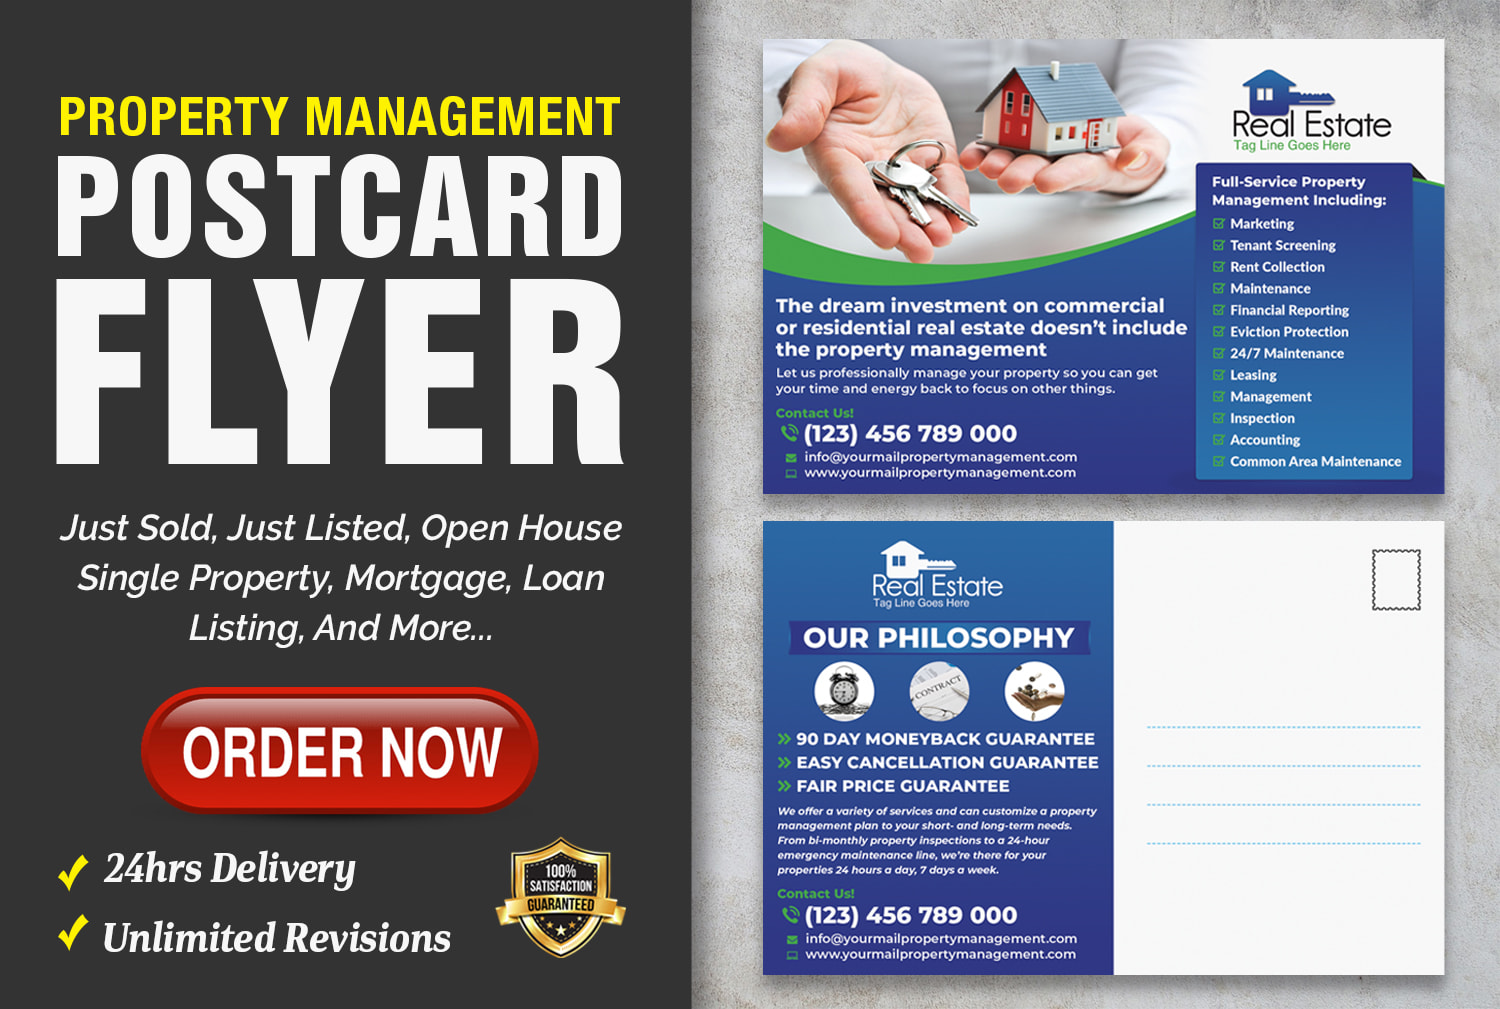 Do property management postcard, eddm postcard or flyer in 20hrs Throughout Property Management Postcards Templates